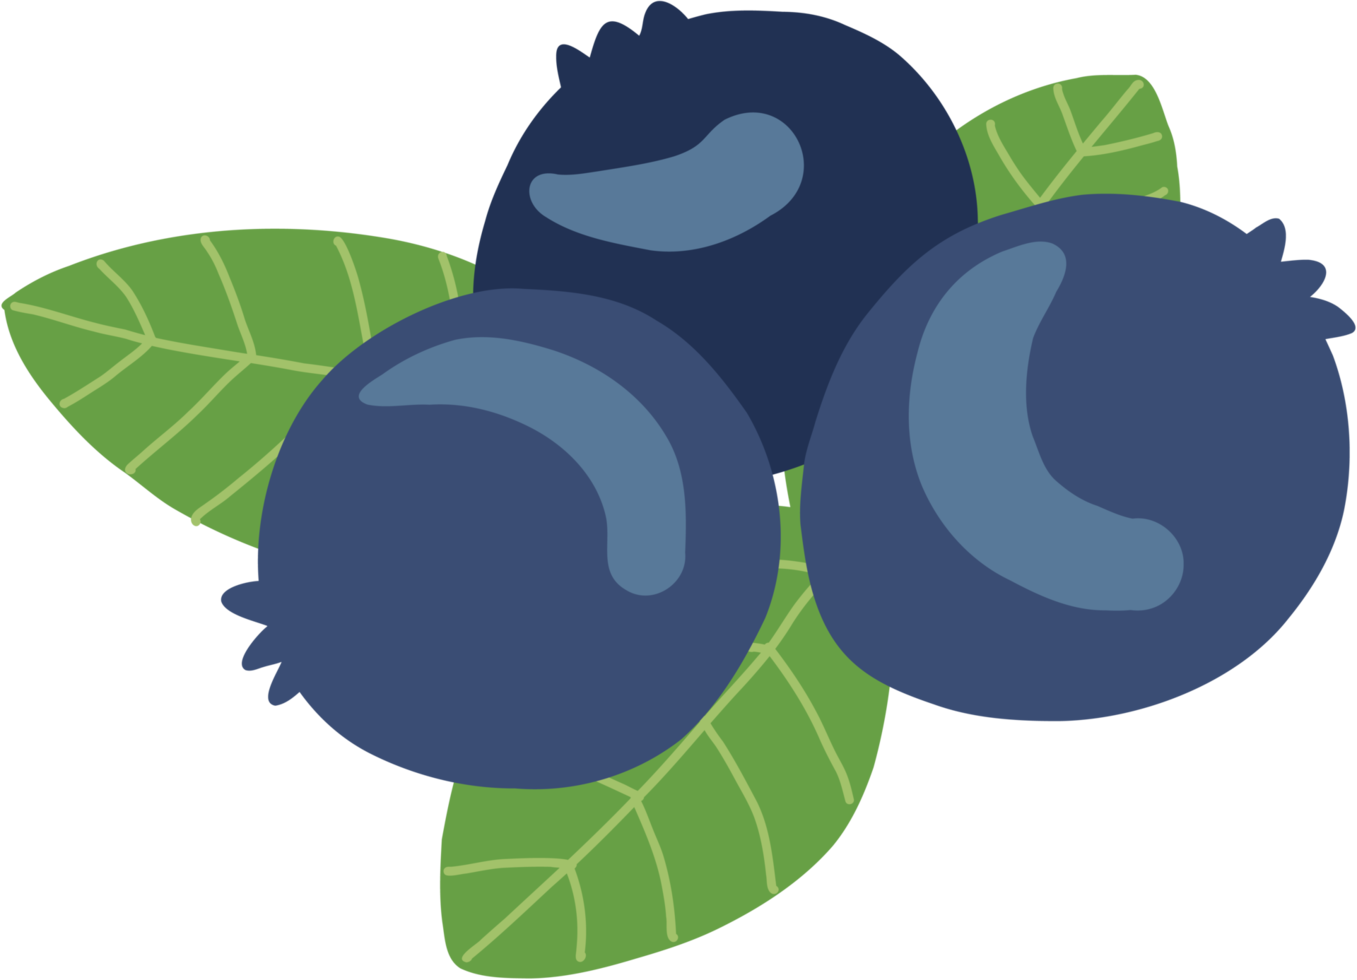 Blueberry Drawing Images  Free Download on Freepik